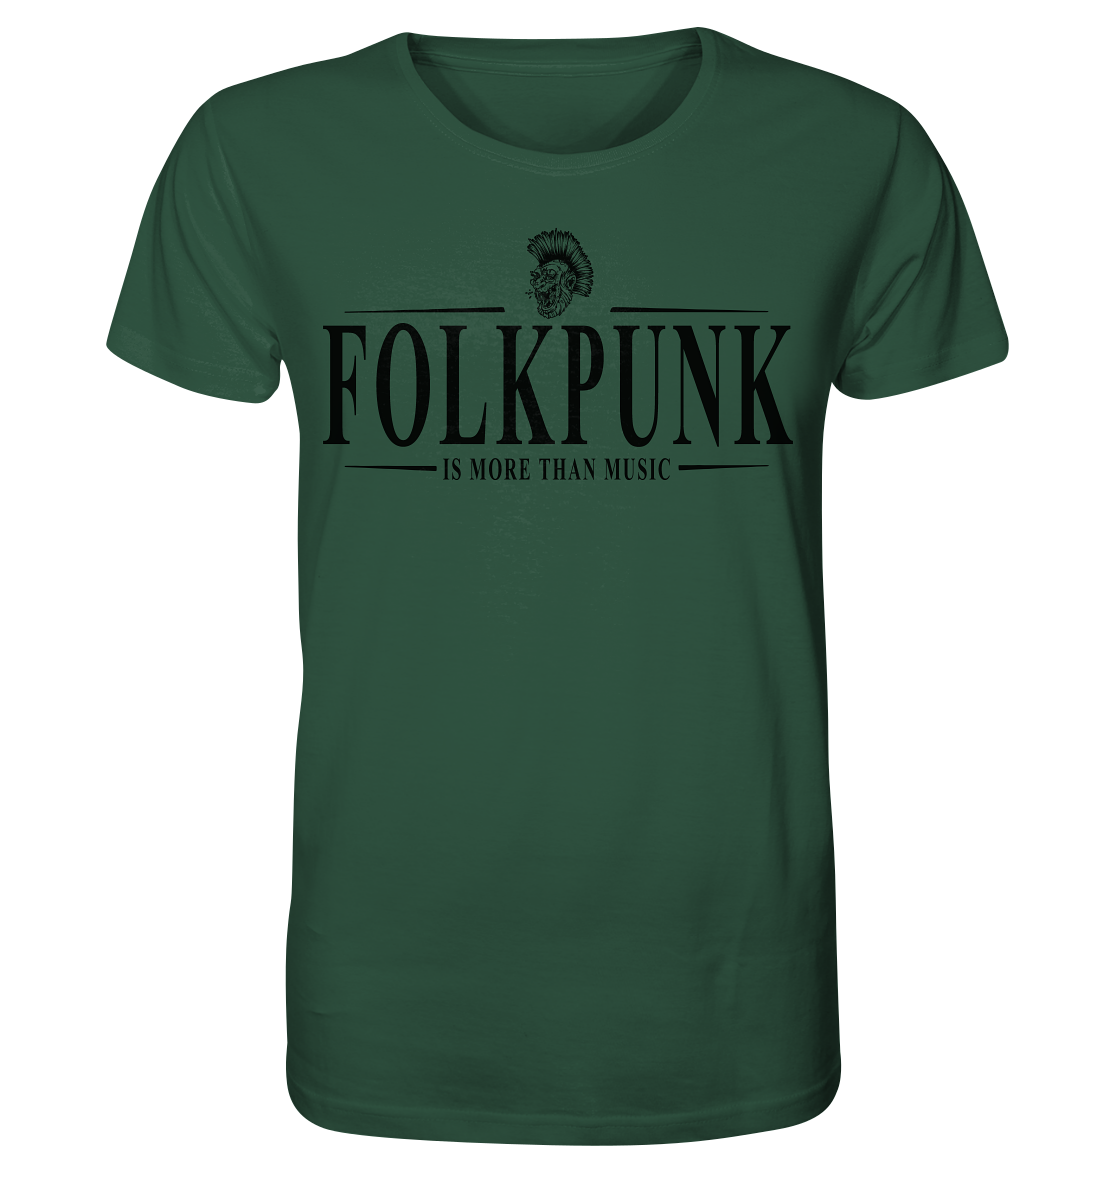 Folkpunk "Is More Than Music" - Organic Shirt